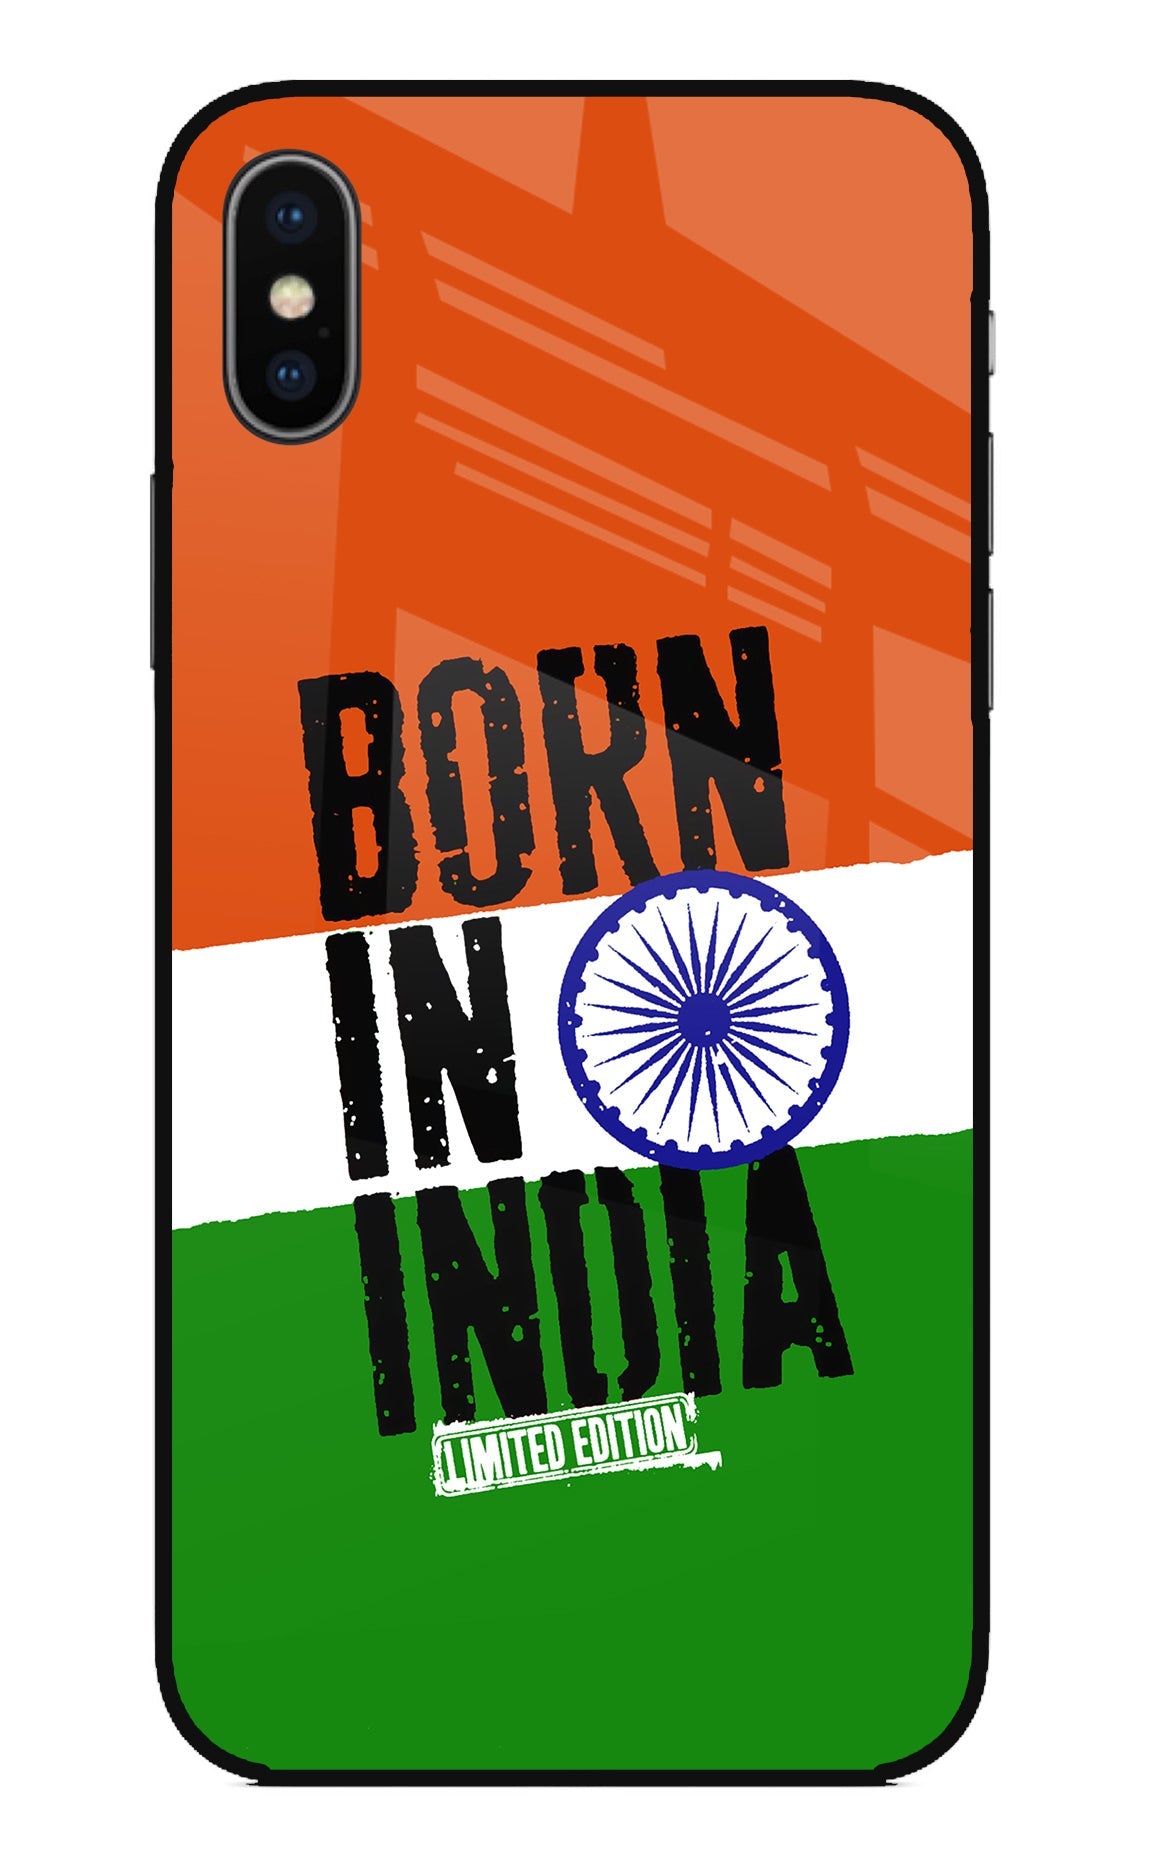 Born in India iPhone XS Glass Case